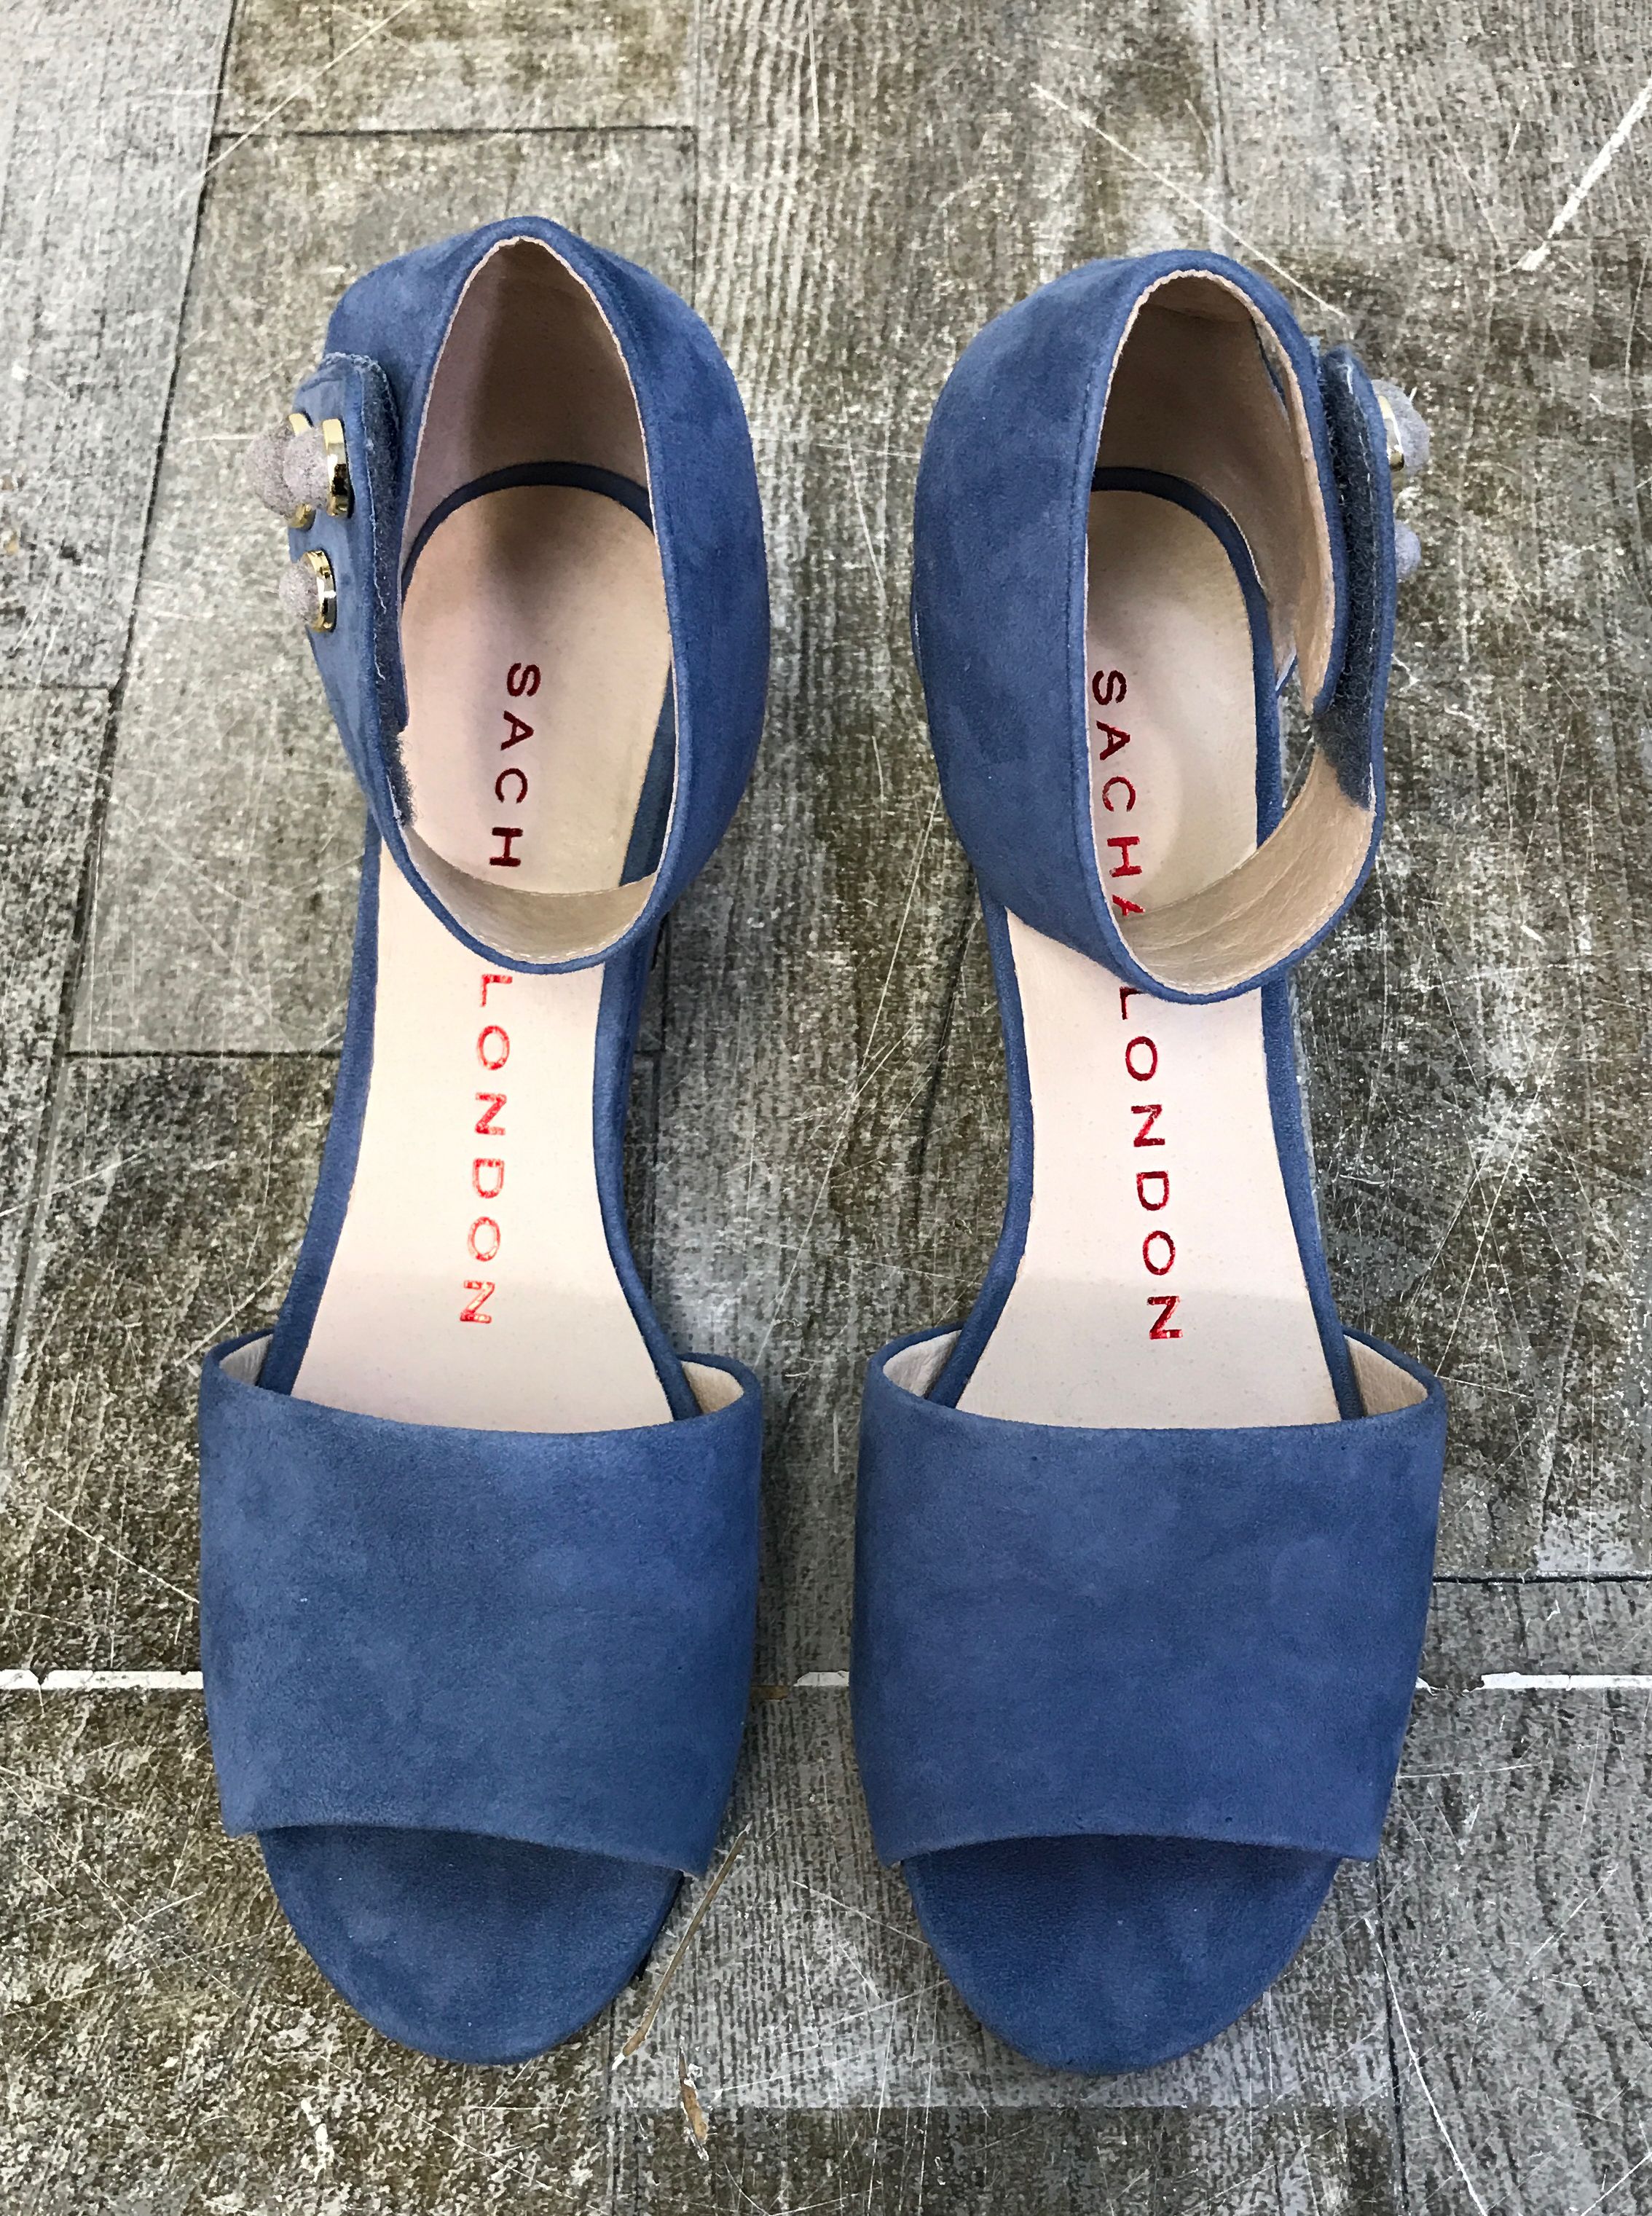 Sacha London Size 6.5 Valero Peep-Toe Wedge Denim Blue